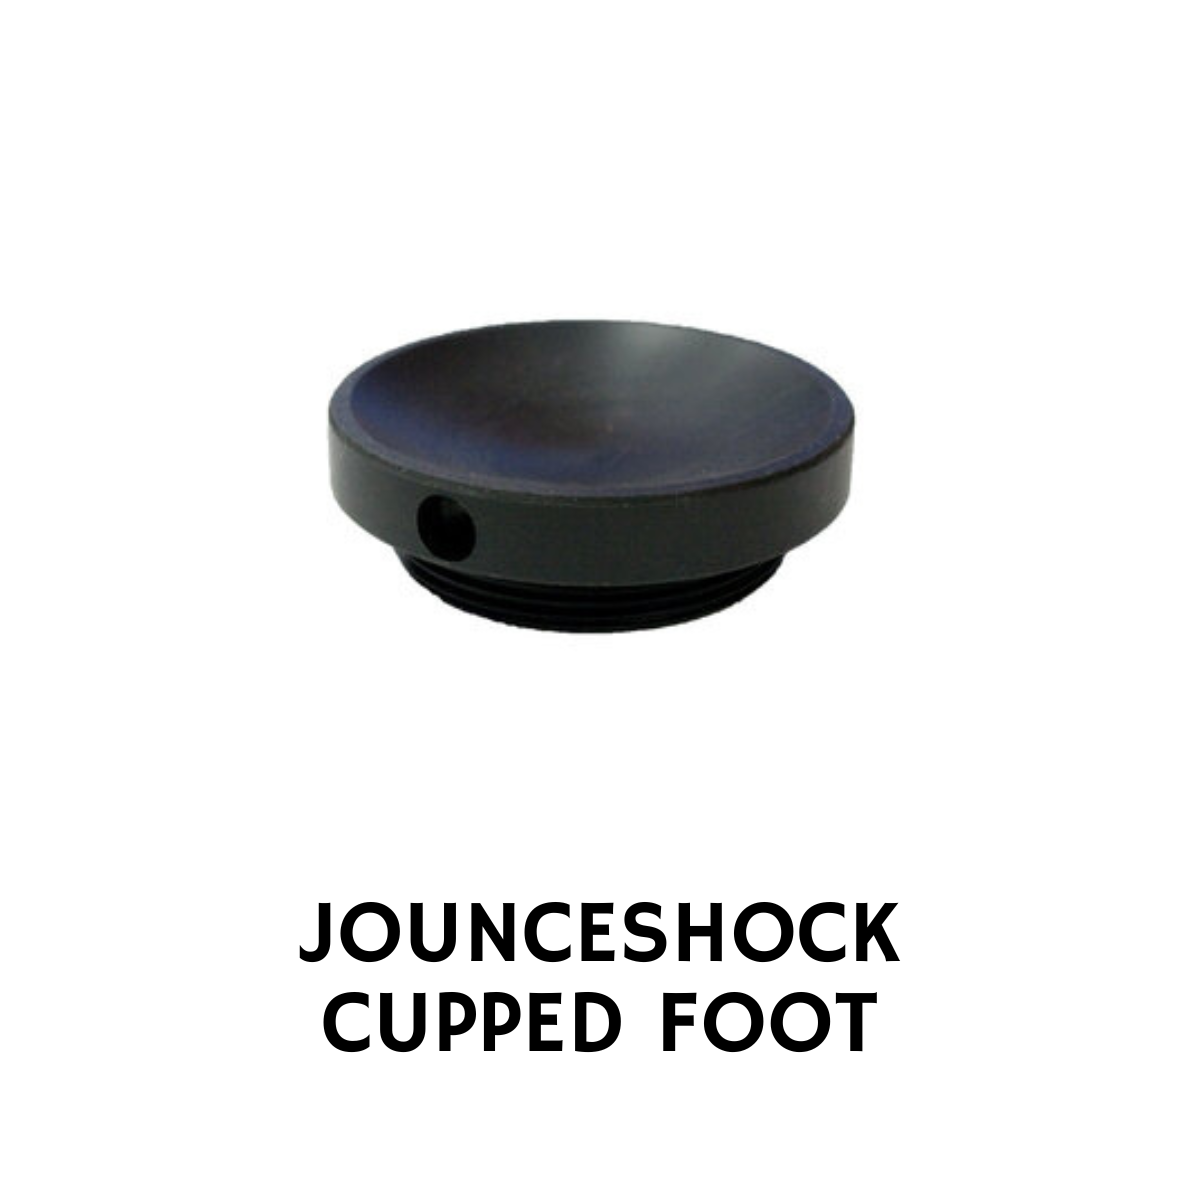 JOUNCESHOCK CUPPED FOOT